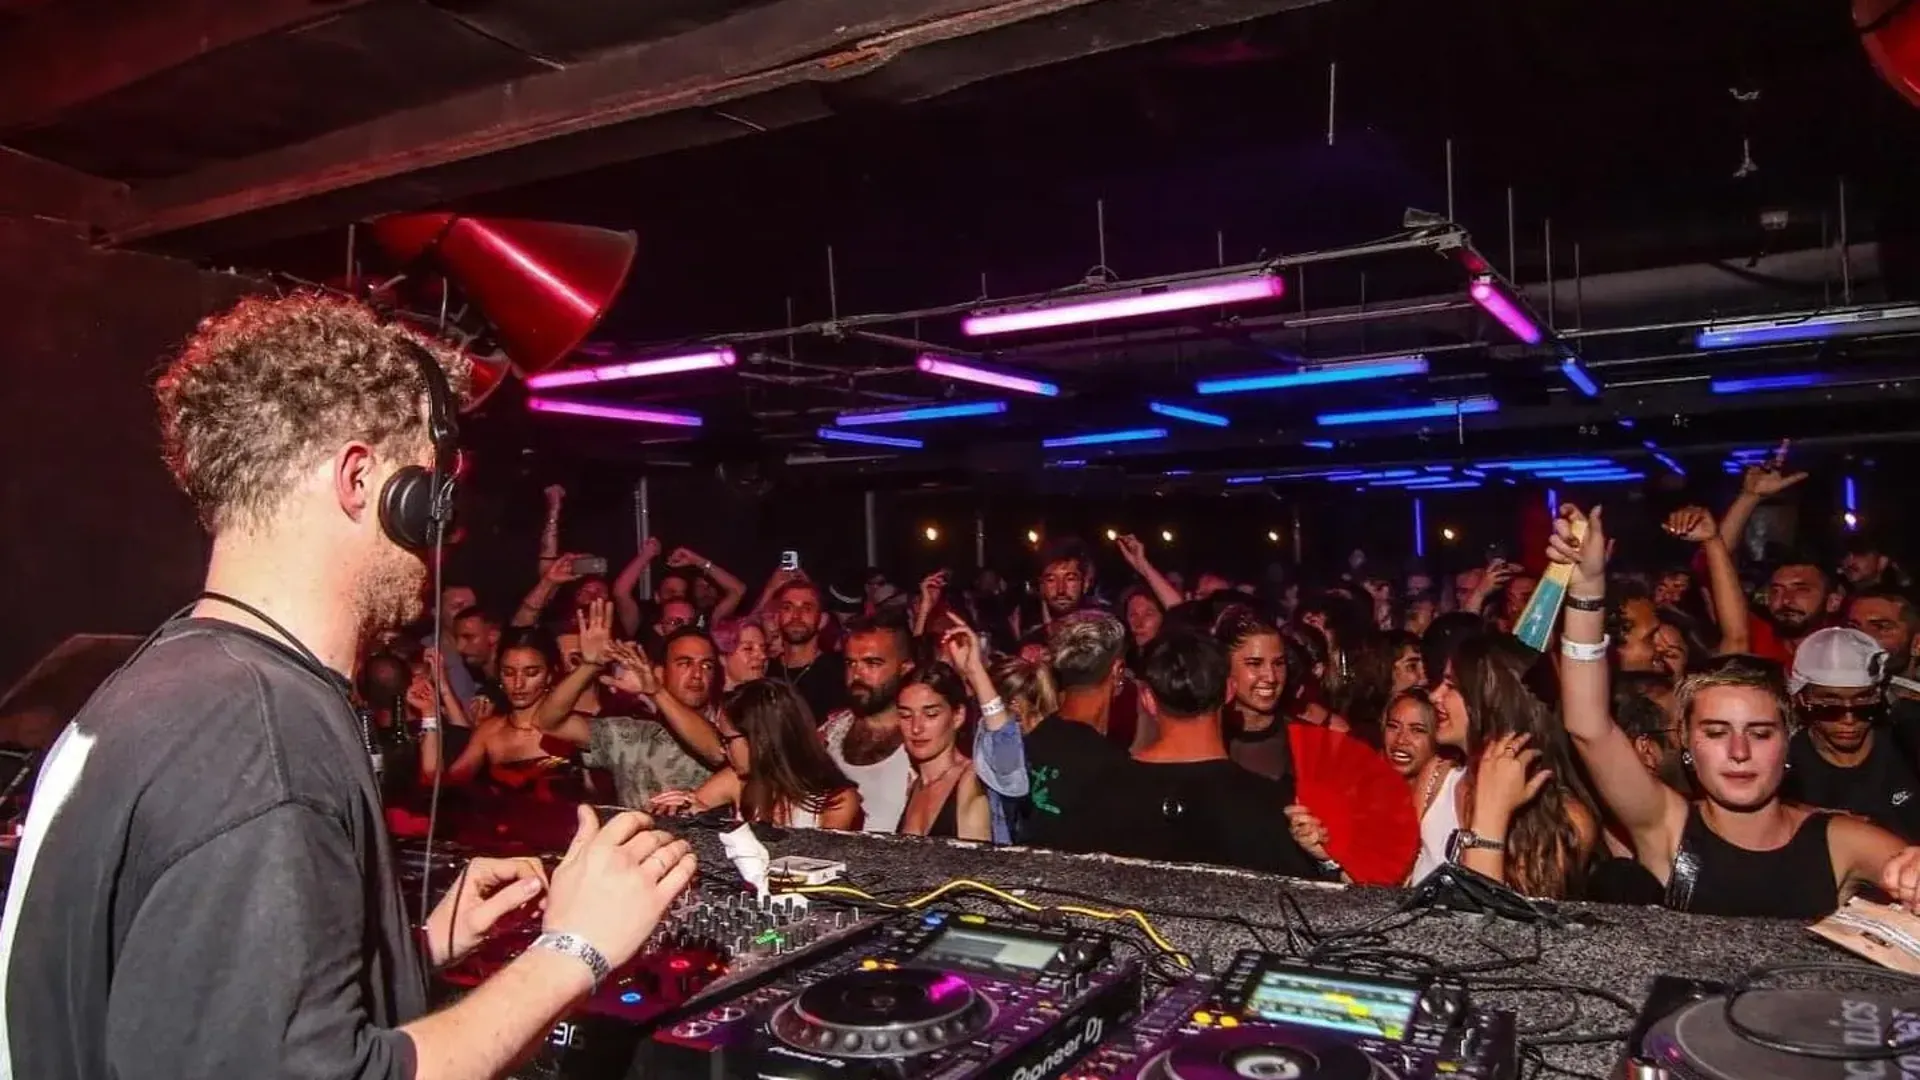 Octan Ibiza Nightclub in Spain, Europe | Nightclubs - Rated 0.4